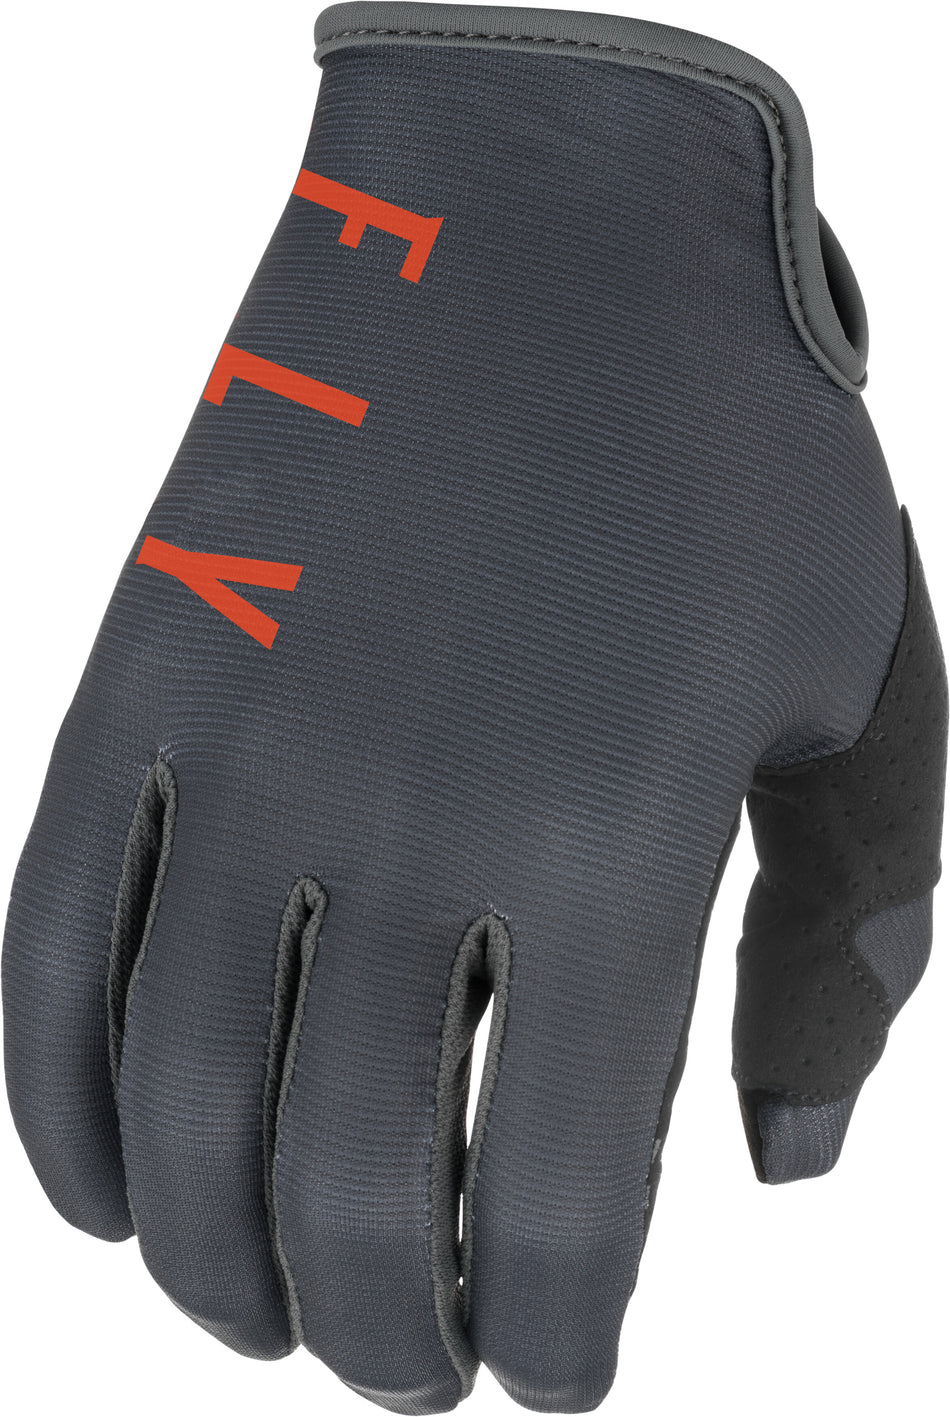 FLY RACING Lite Gloves Grey/Orange/Black Sz 12 374-71612